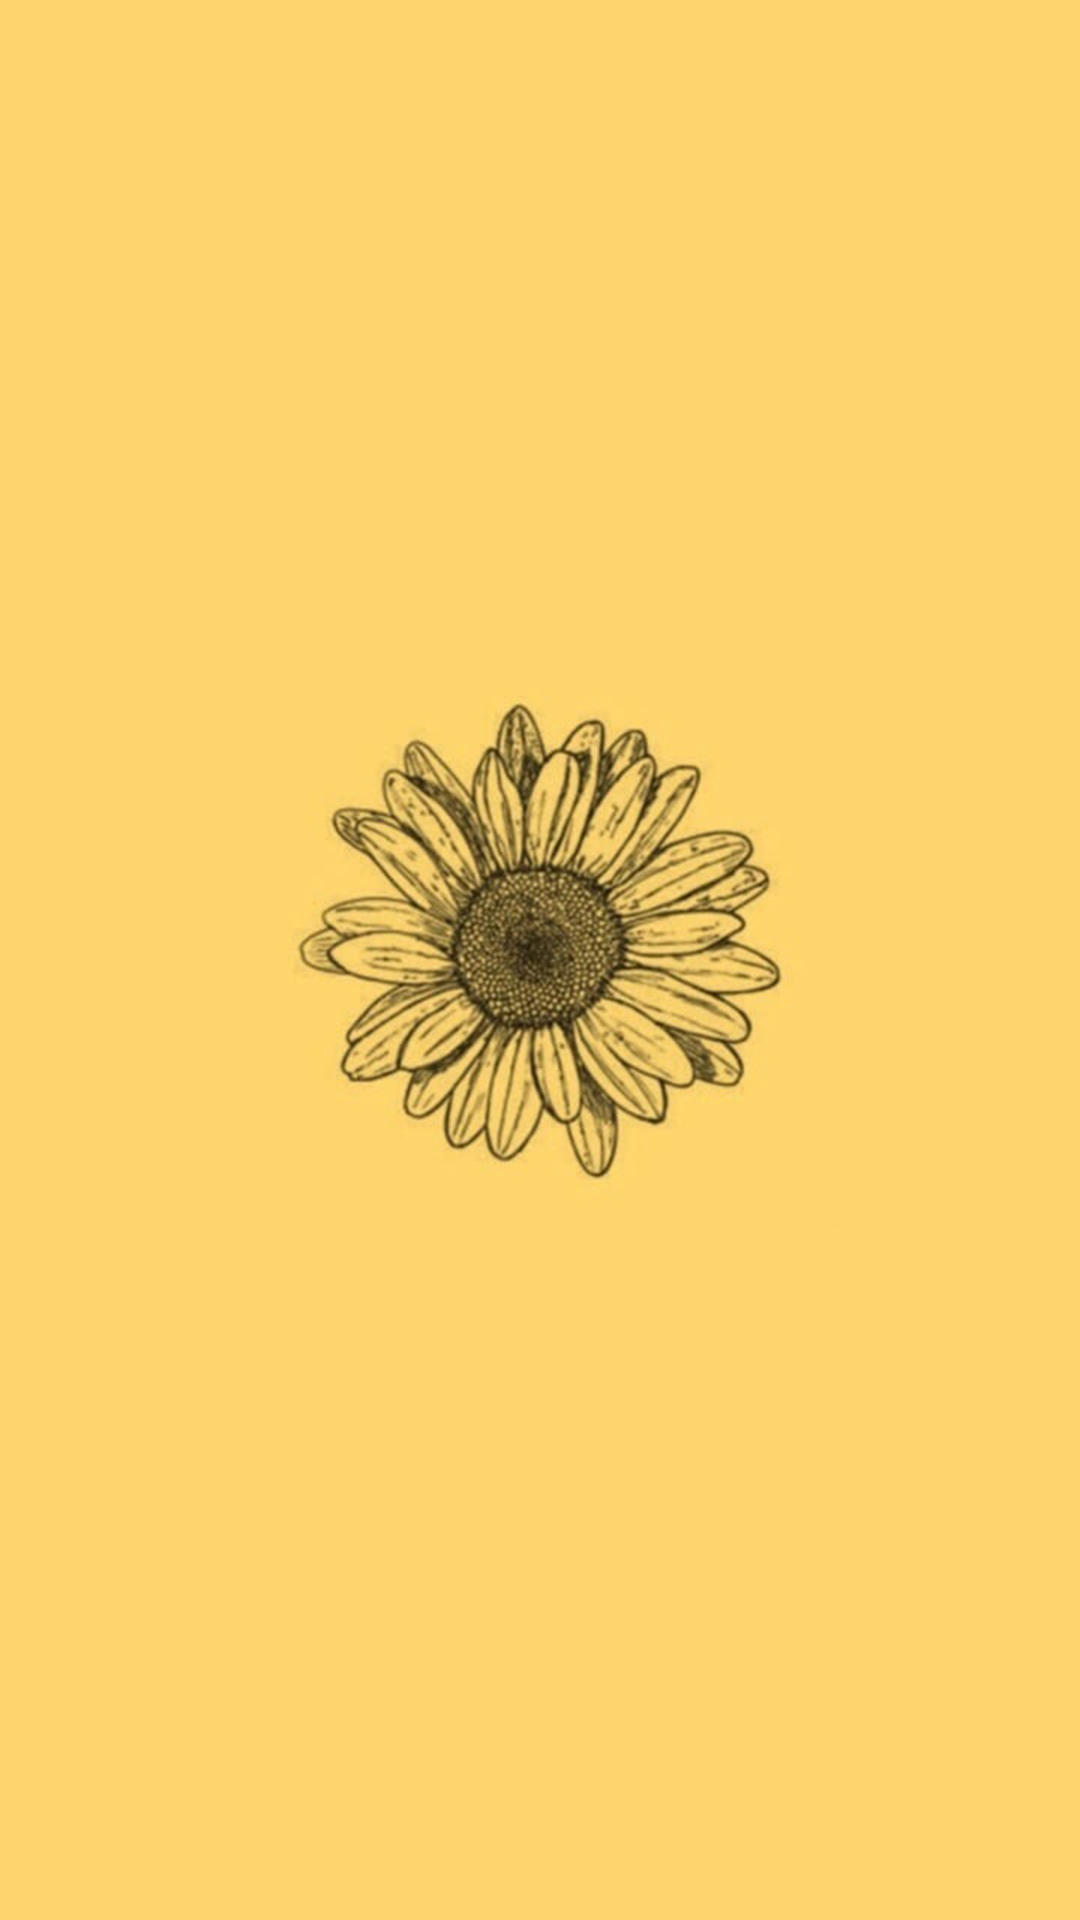  on Twitter Sunflower wallpaper  WALLPAPERIPHONE Wallpapers  Sunflowerchild Sunflower httpstcocVFXYsZbpx  Twitter